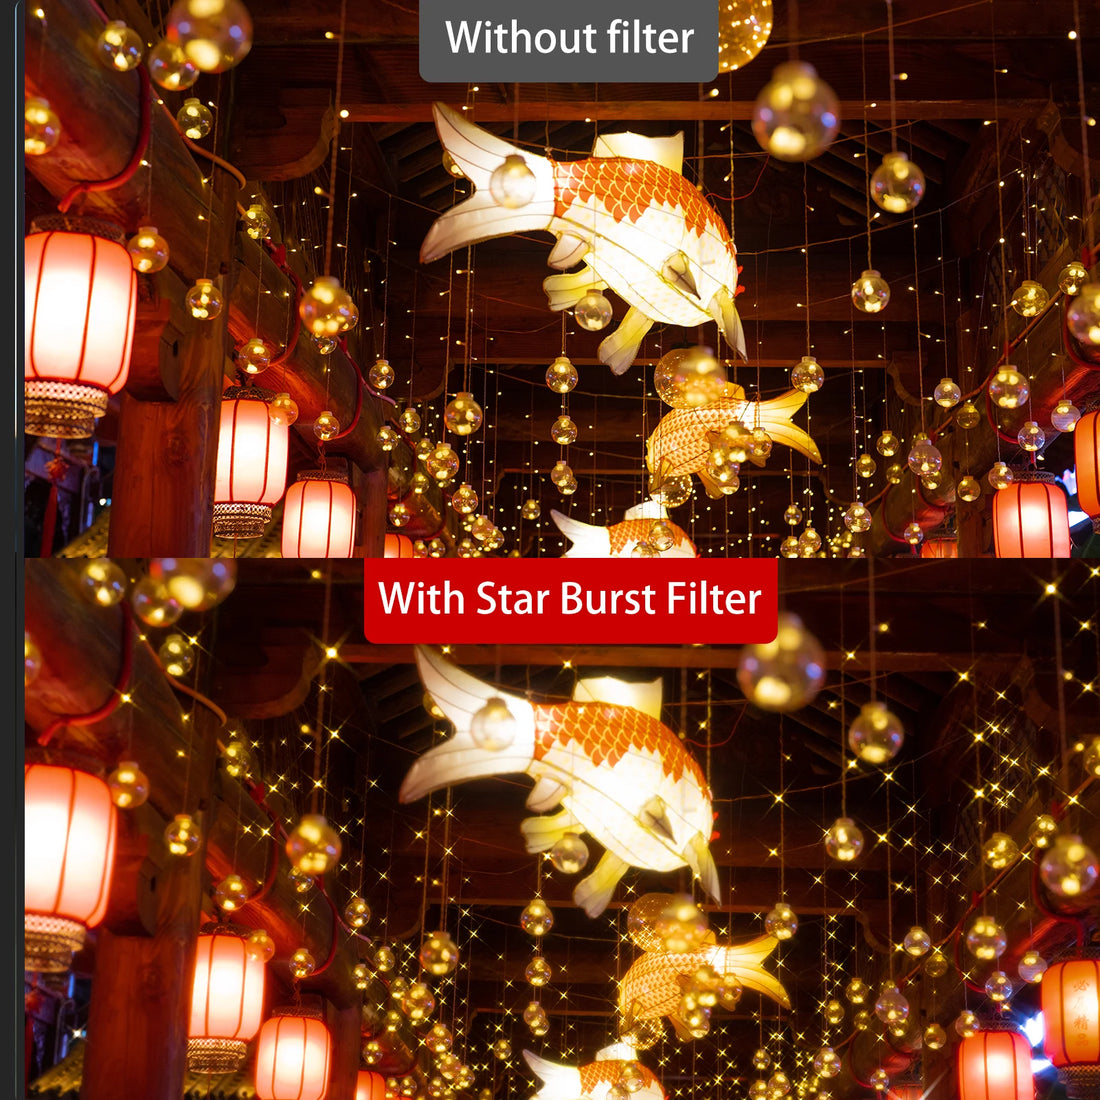 [New] Kase Magnetic 58mm Star Burst Filter for Mobile